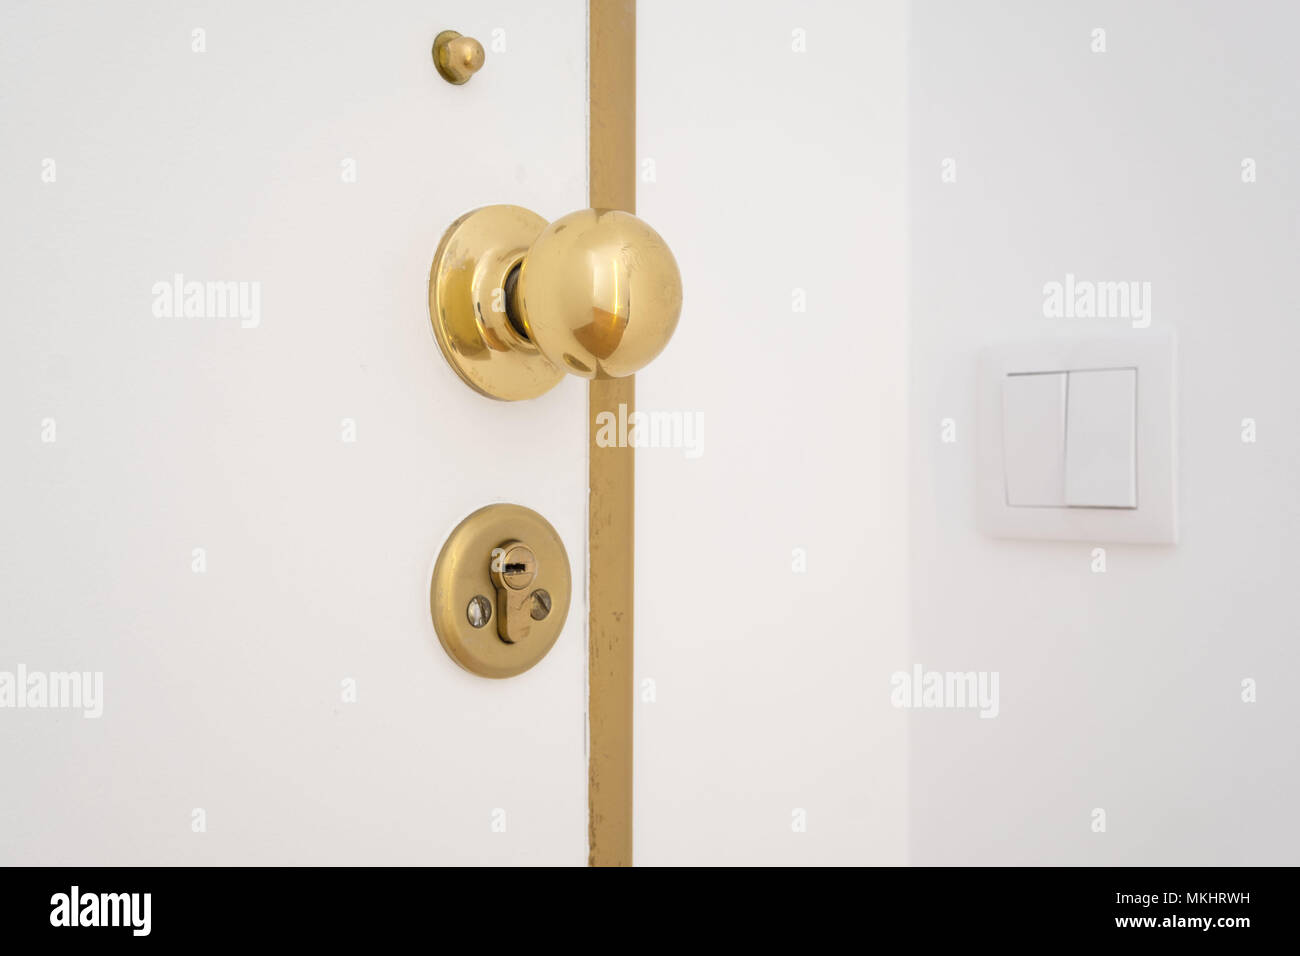 Golden door knob and keyhole Stock Photo